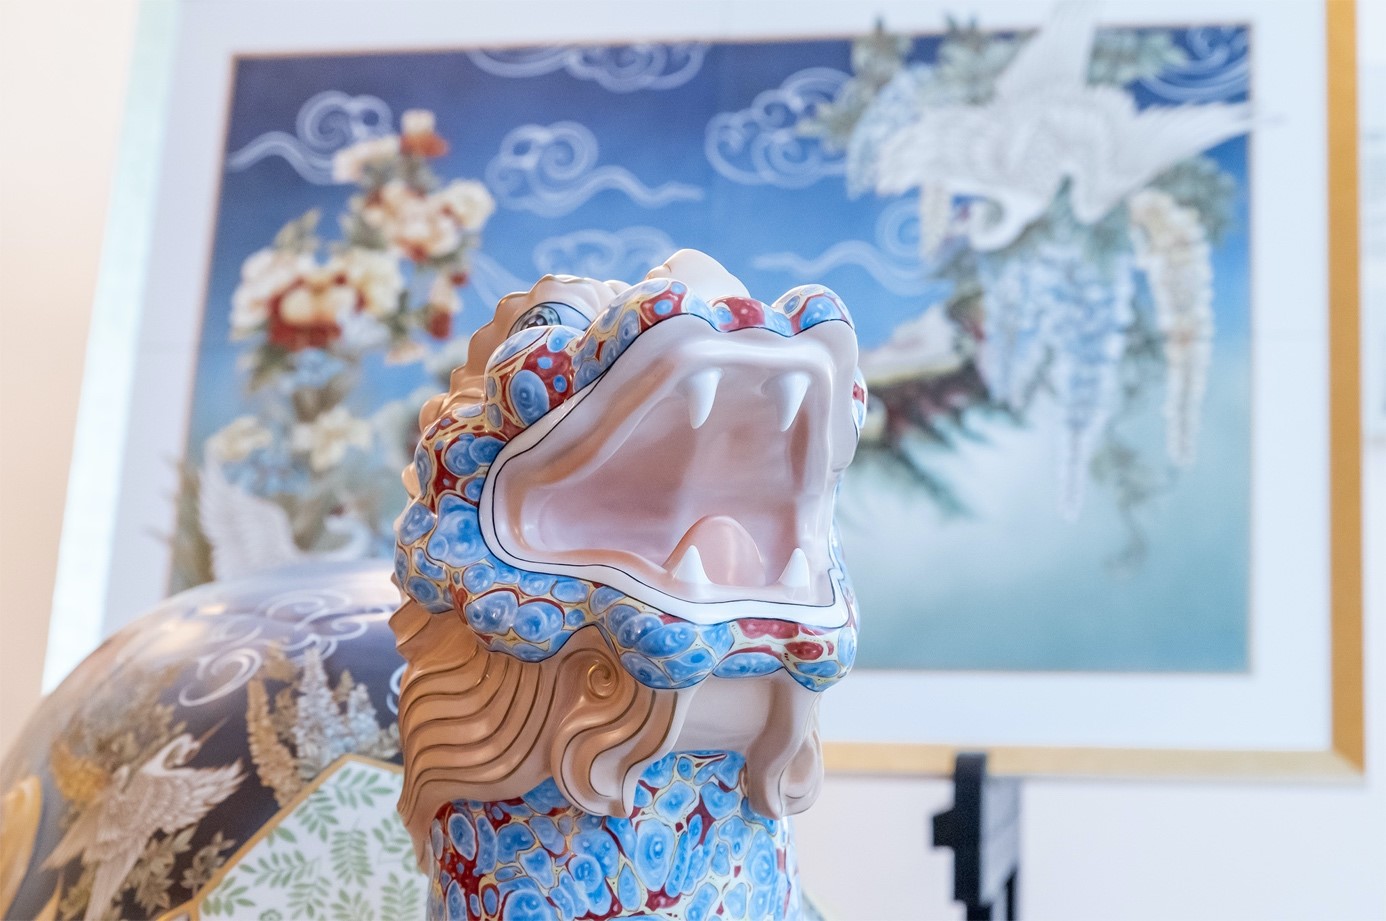 Széchenyi István University: an exclusive Herend porcelain exhibition opened in the Óvár Castle